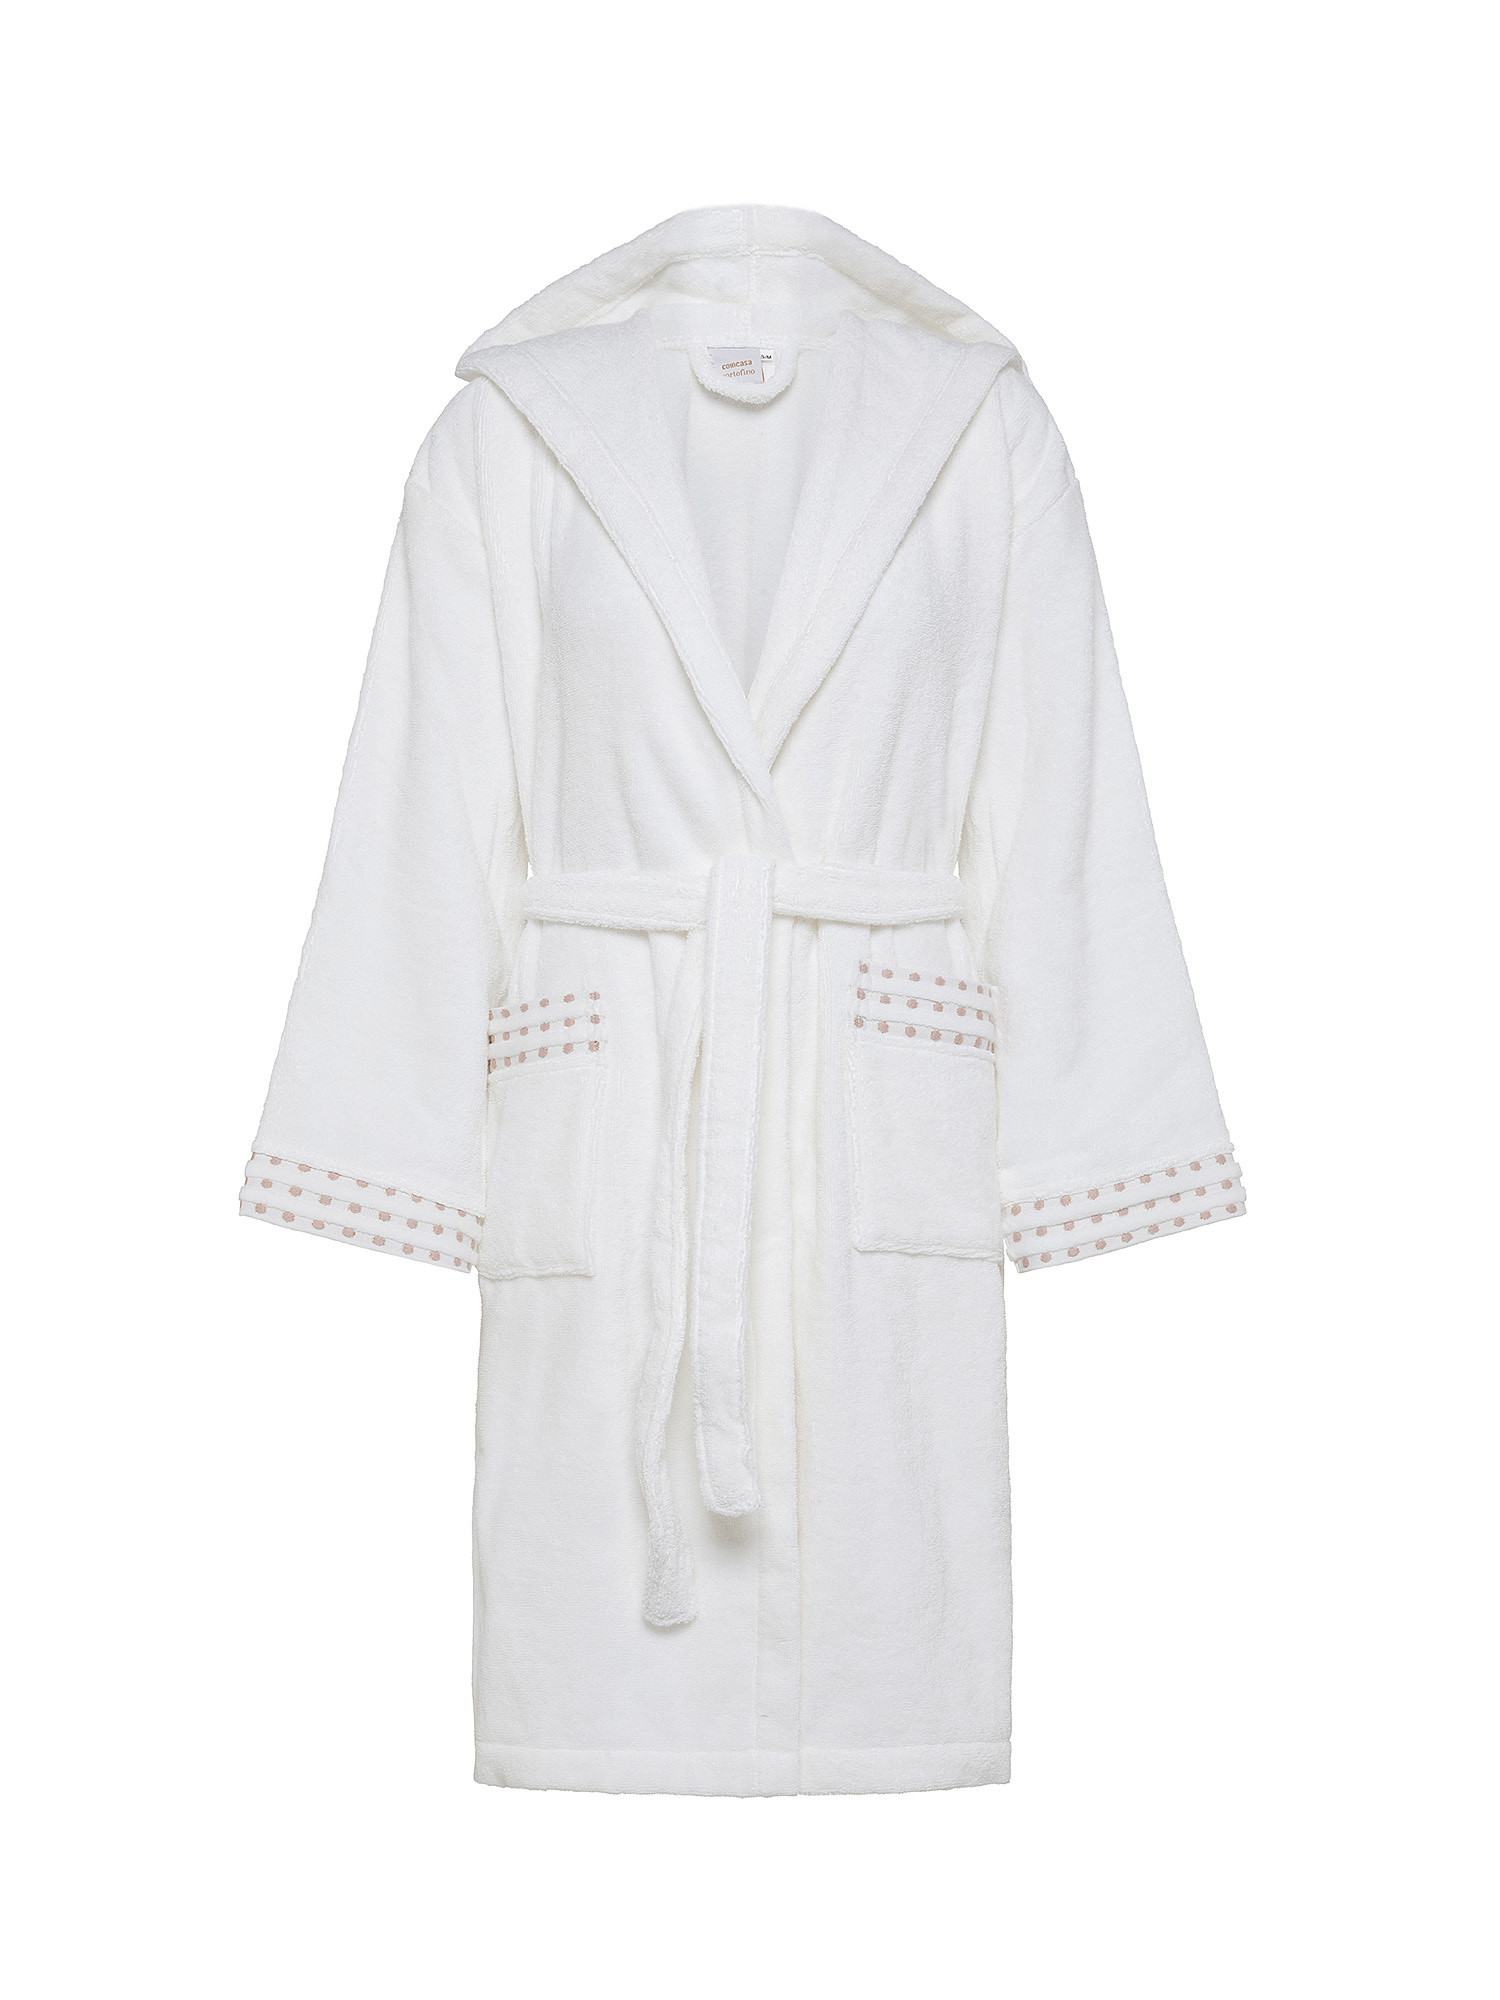 Portofino cotton bathrobe with geometric pattern, White, large image number 0